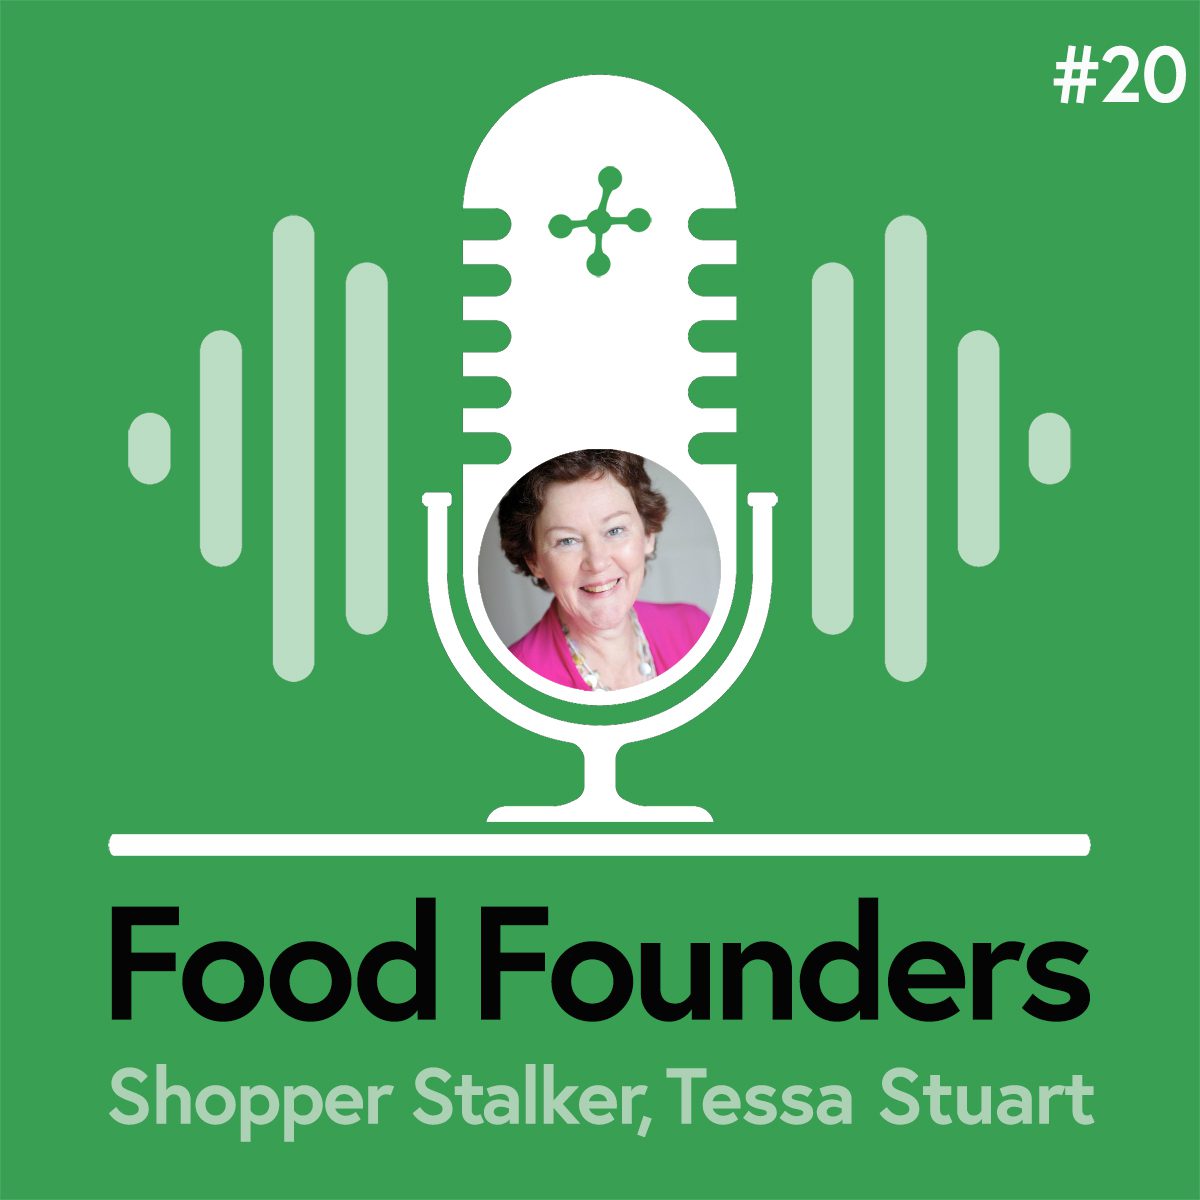 Food Founders Interview - Shopper Stalker Tessa Stuart